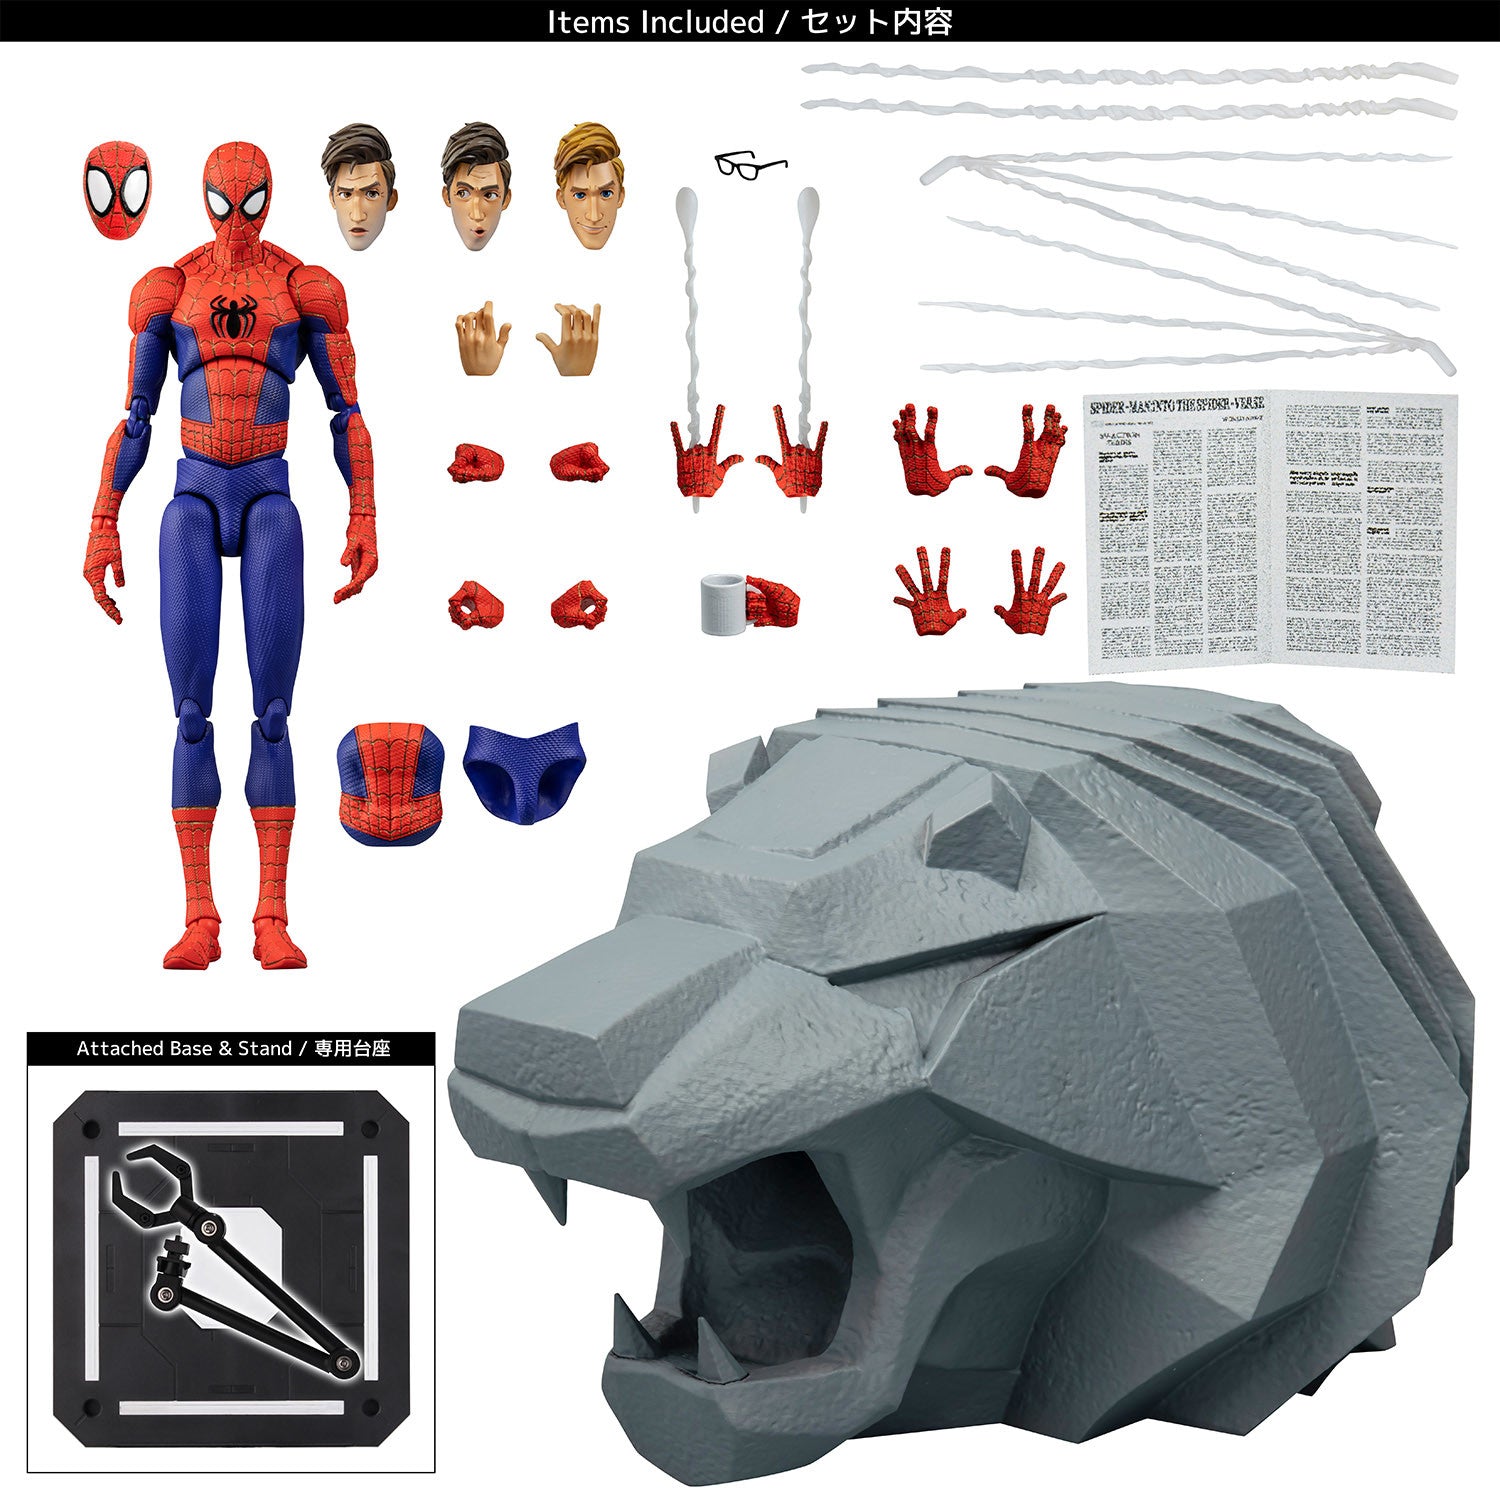 Spider-Man: Into the Spider-Verse Sentinel SV-Action Peter B. Parker Reissue Figure DX Version Buy